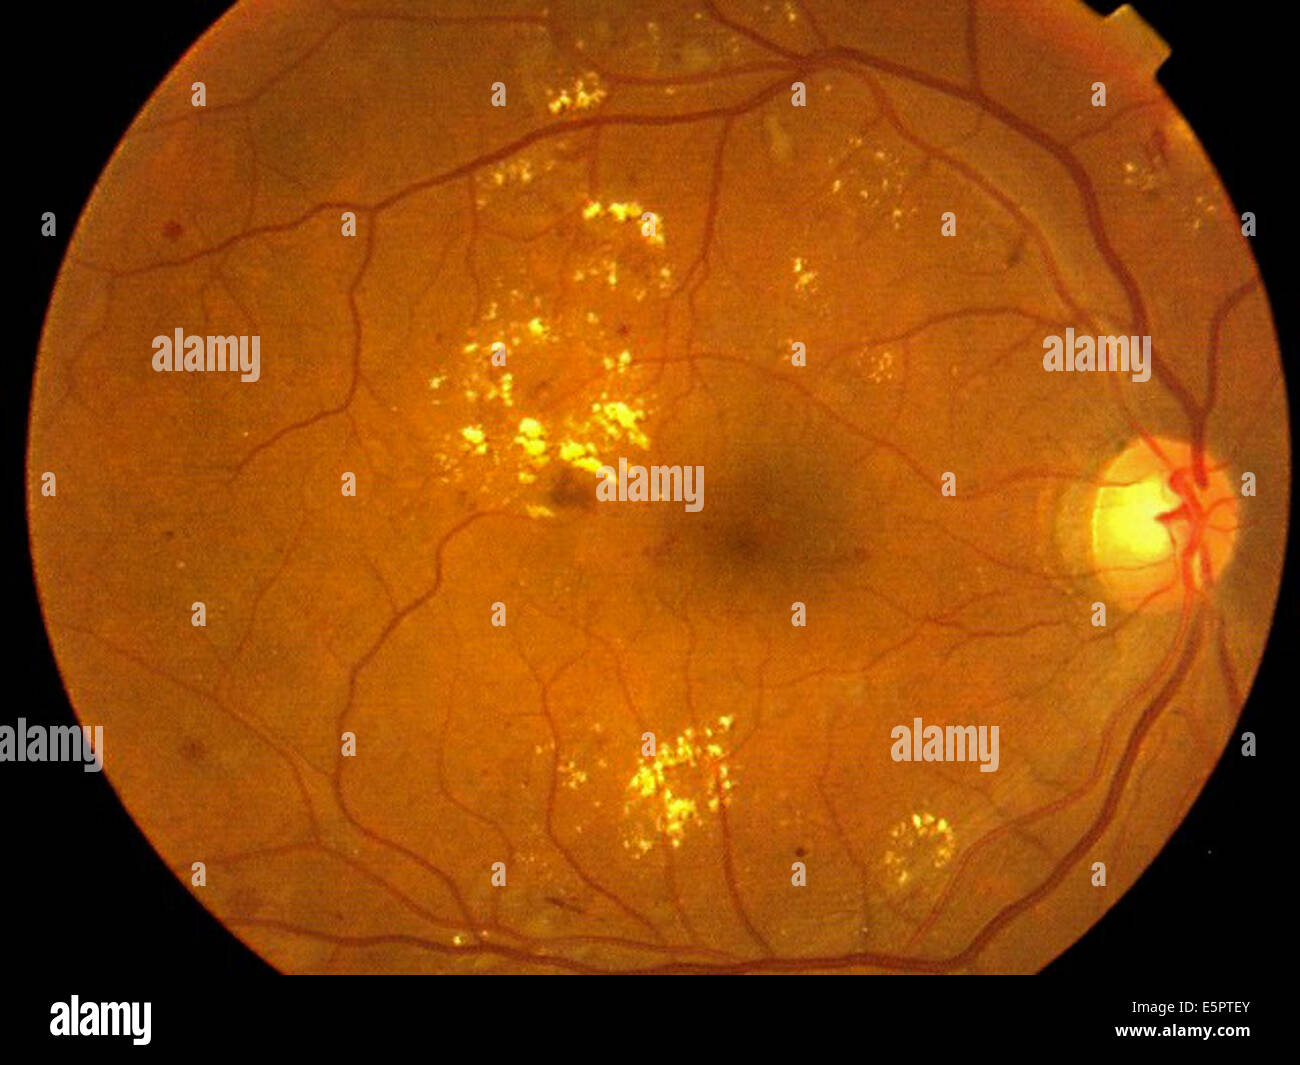 Fundus camera image (ophthalmoscope) of the retina showing acute proliferative diabetic retinopathy. Stock Photo